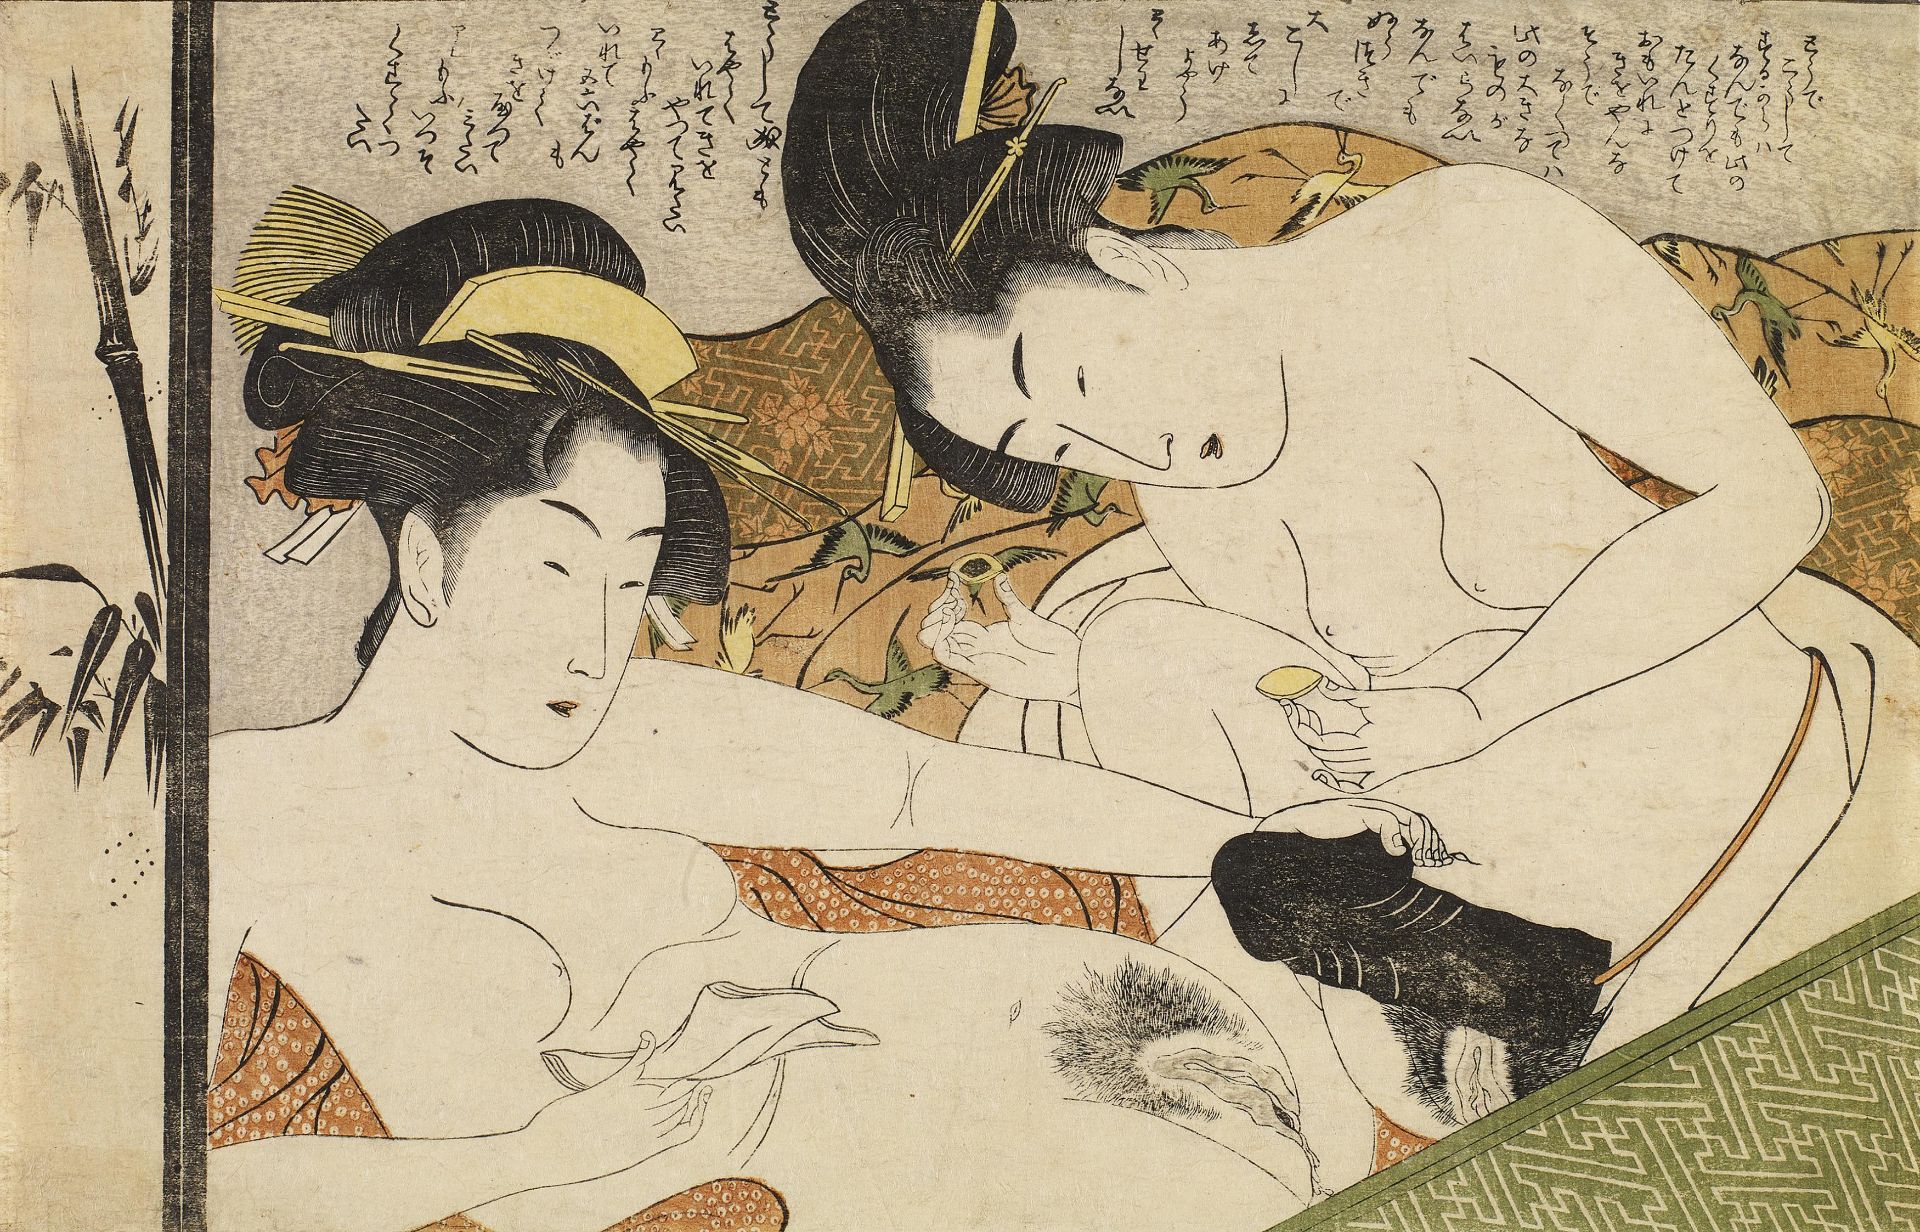 13 Blätter der Shunga-Serie "Fumi no kiyogaki" - Image 27 of 27